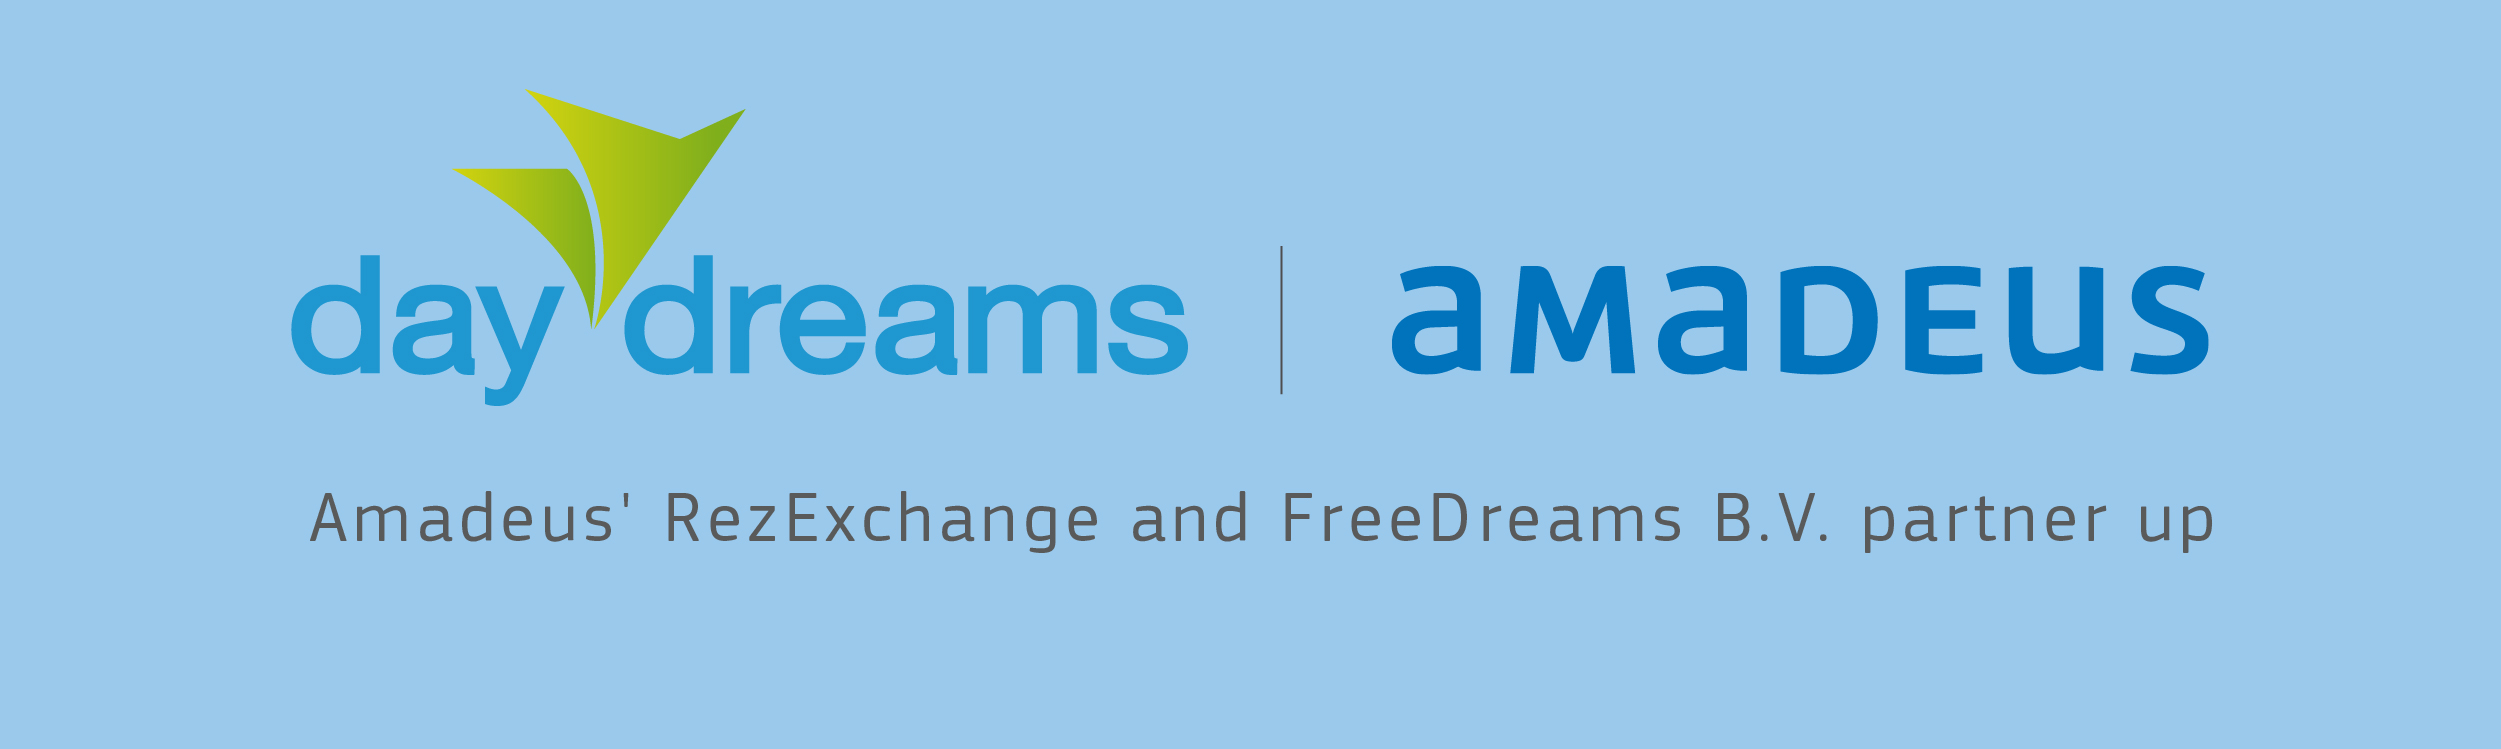 FreeDreams BV Joins the Amadeus RezExchange Community